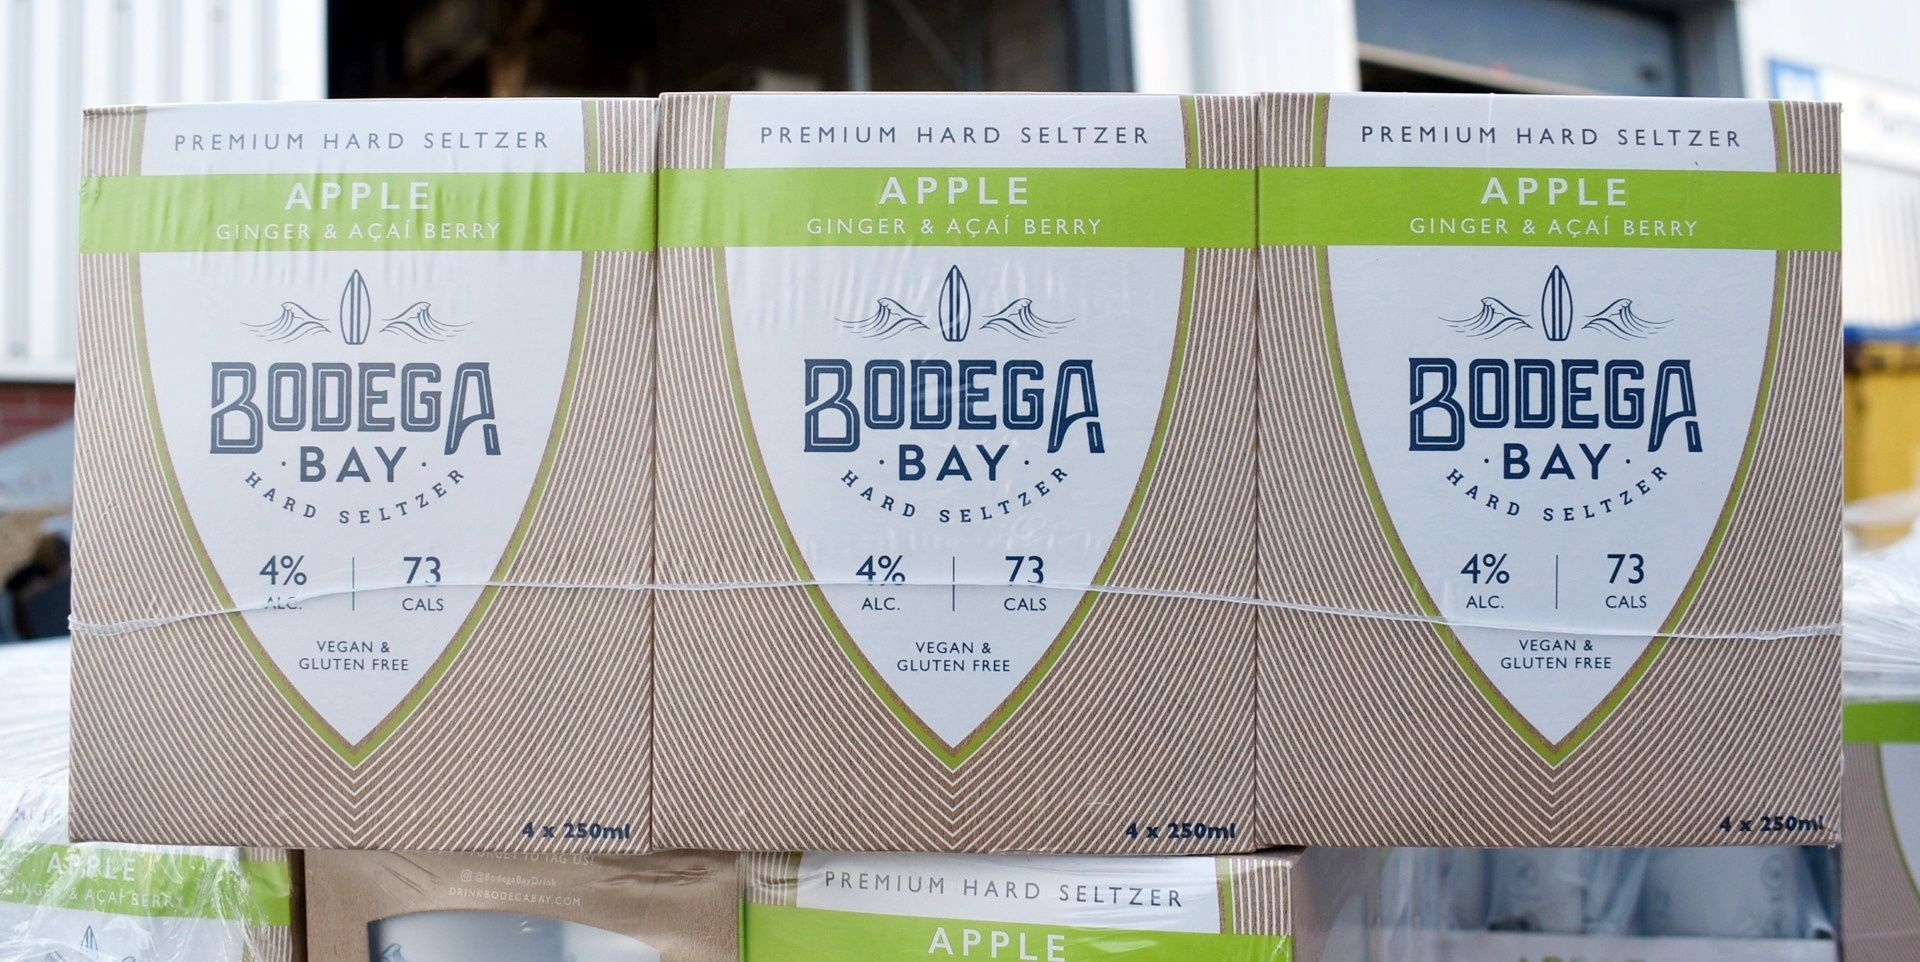 24 x Bodega Bay Hard Seltzer 250ml Alcoholic Sparkling Water Drinks - Apple Ginger & Acai Berry - 4% - Image 5 of 9